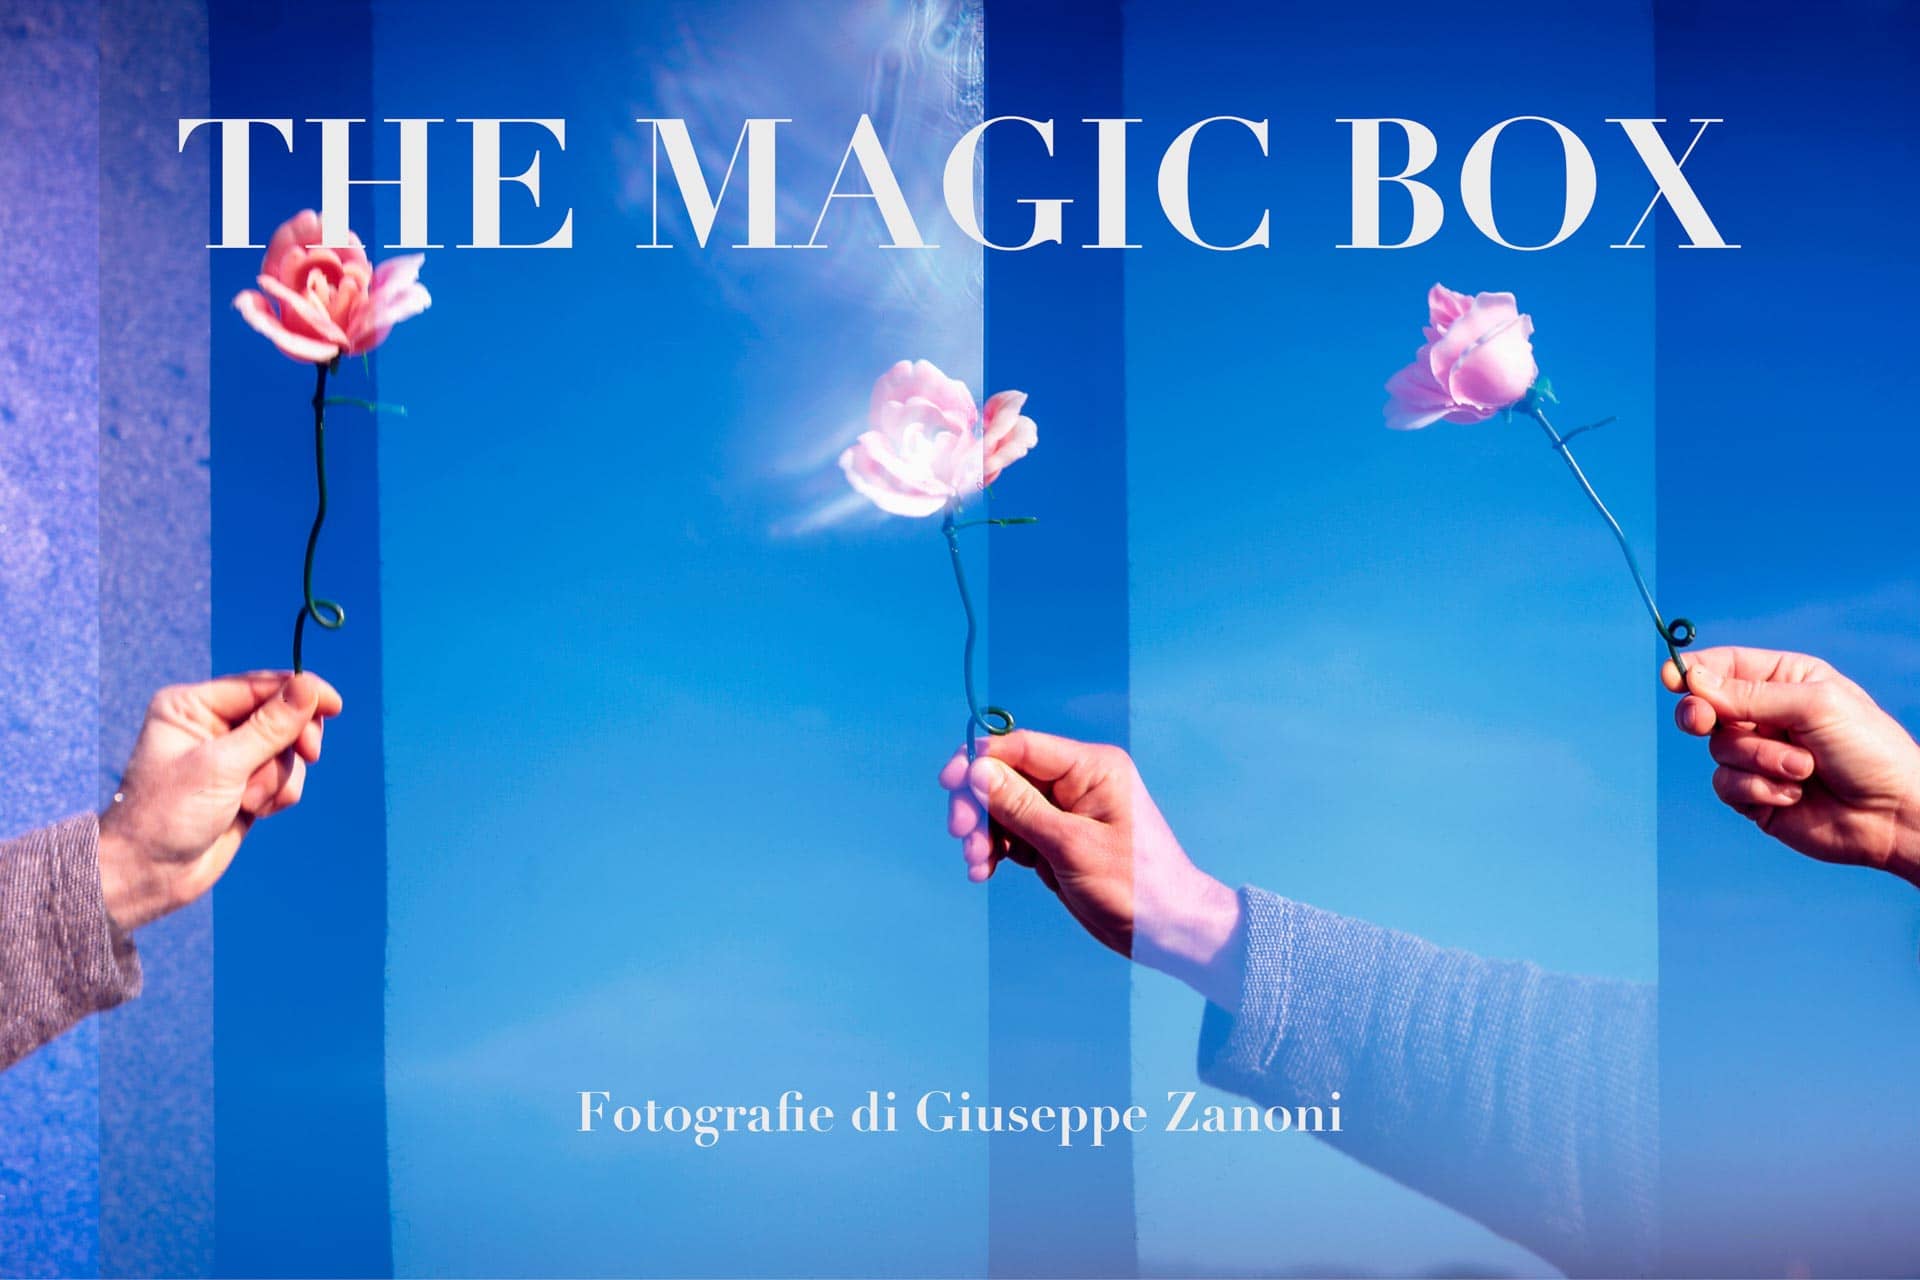 the magic box surreal photo cover Photo book "THE MAGIC BOX" 20x30 cm gift certificate photo book gift certificate photo book